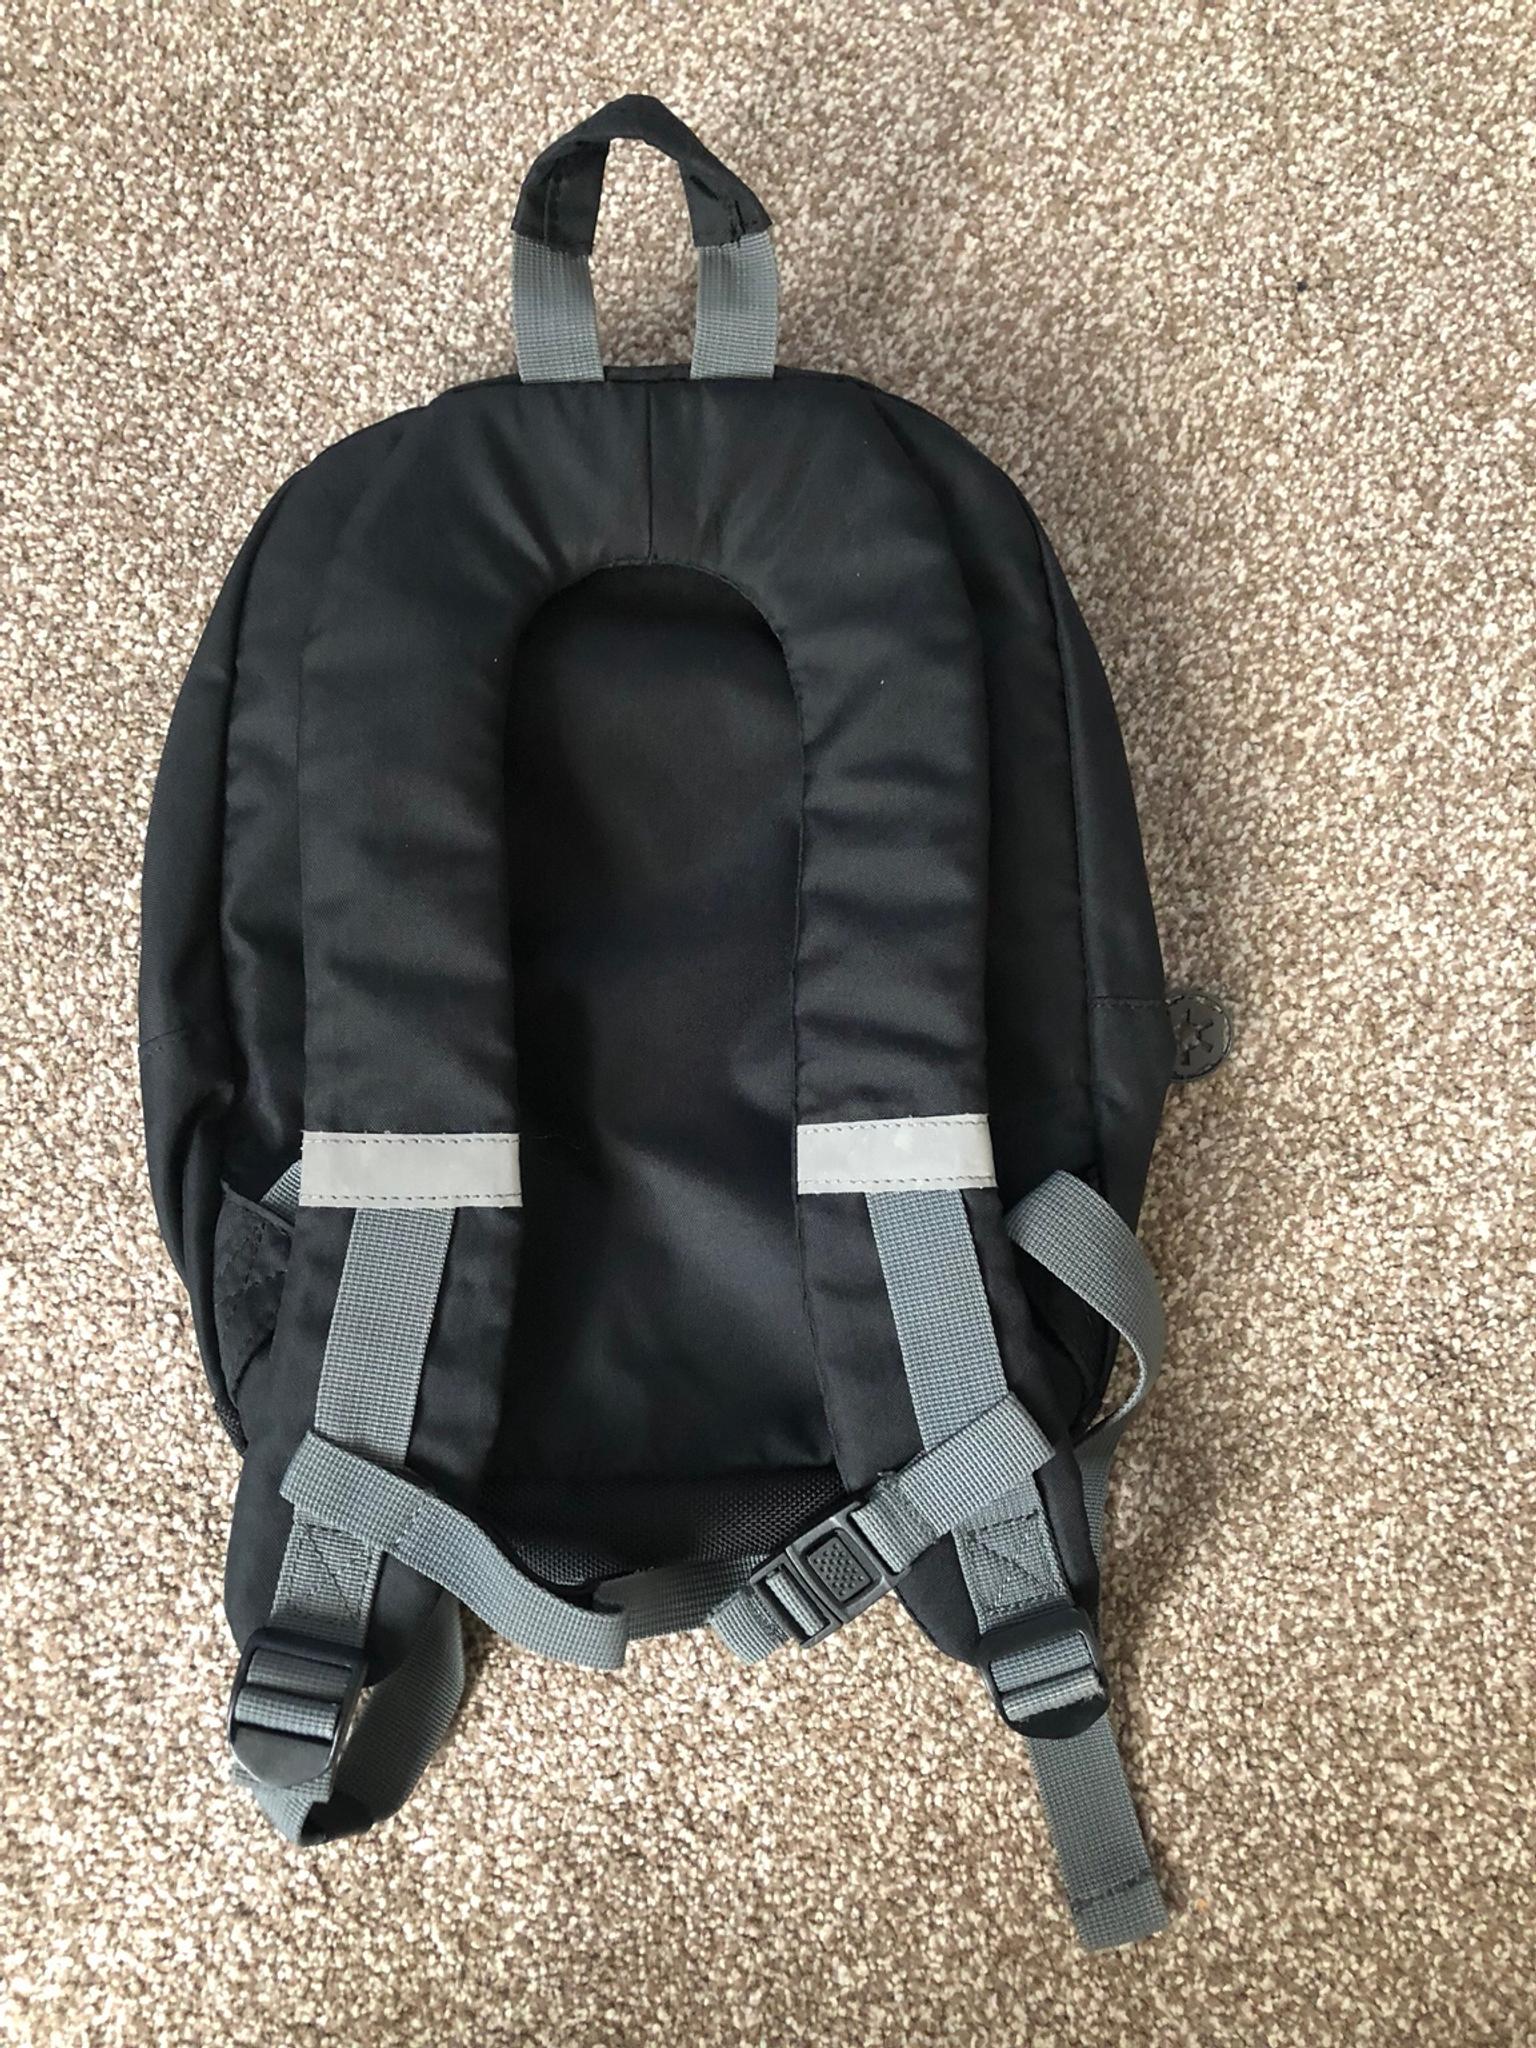 samsonite star wars backpack